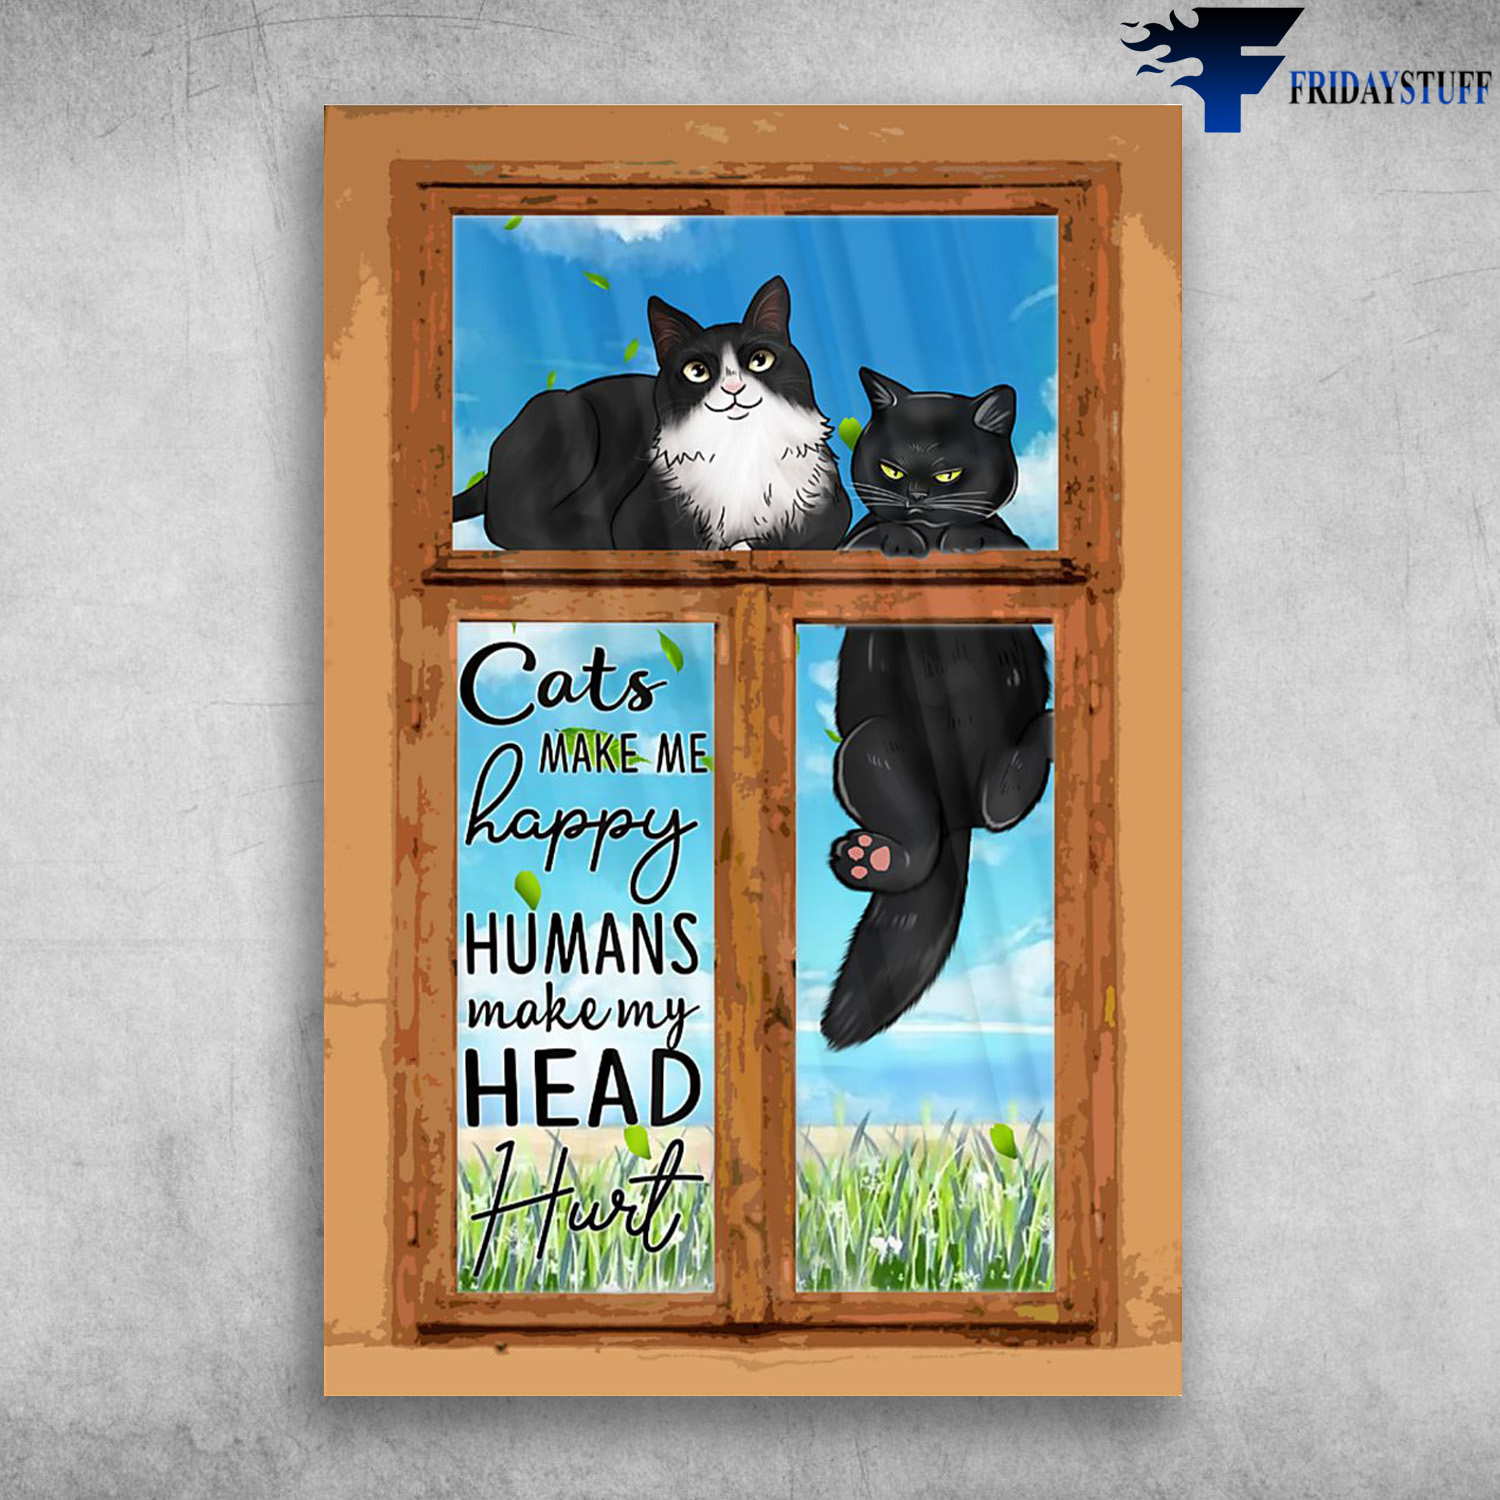 The Cats On Window Pane - Cats Make Me Happy, Humans Make My Head Hurt